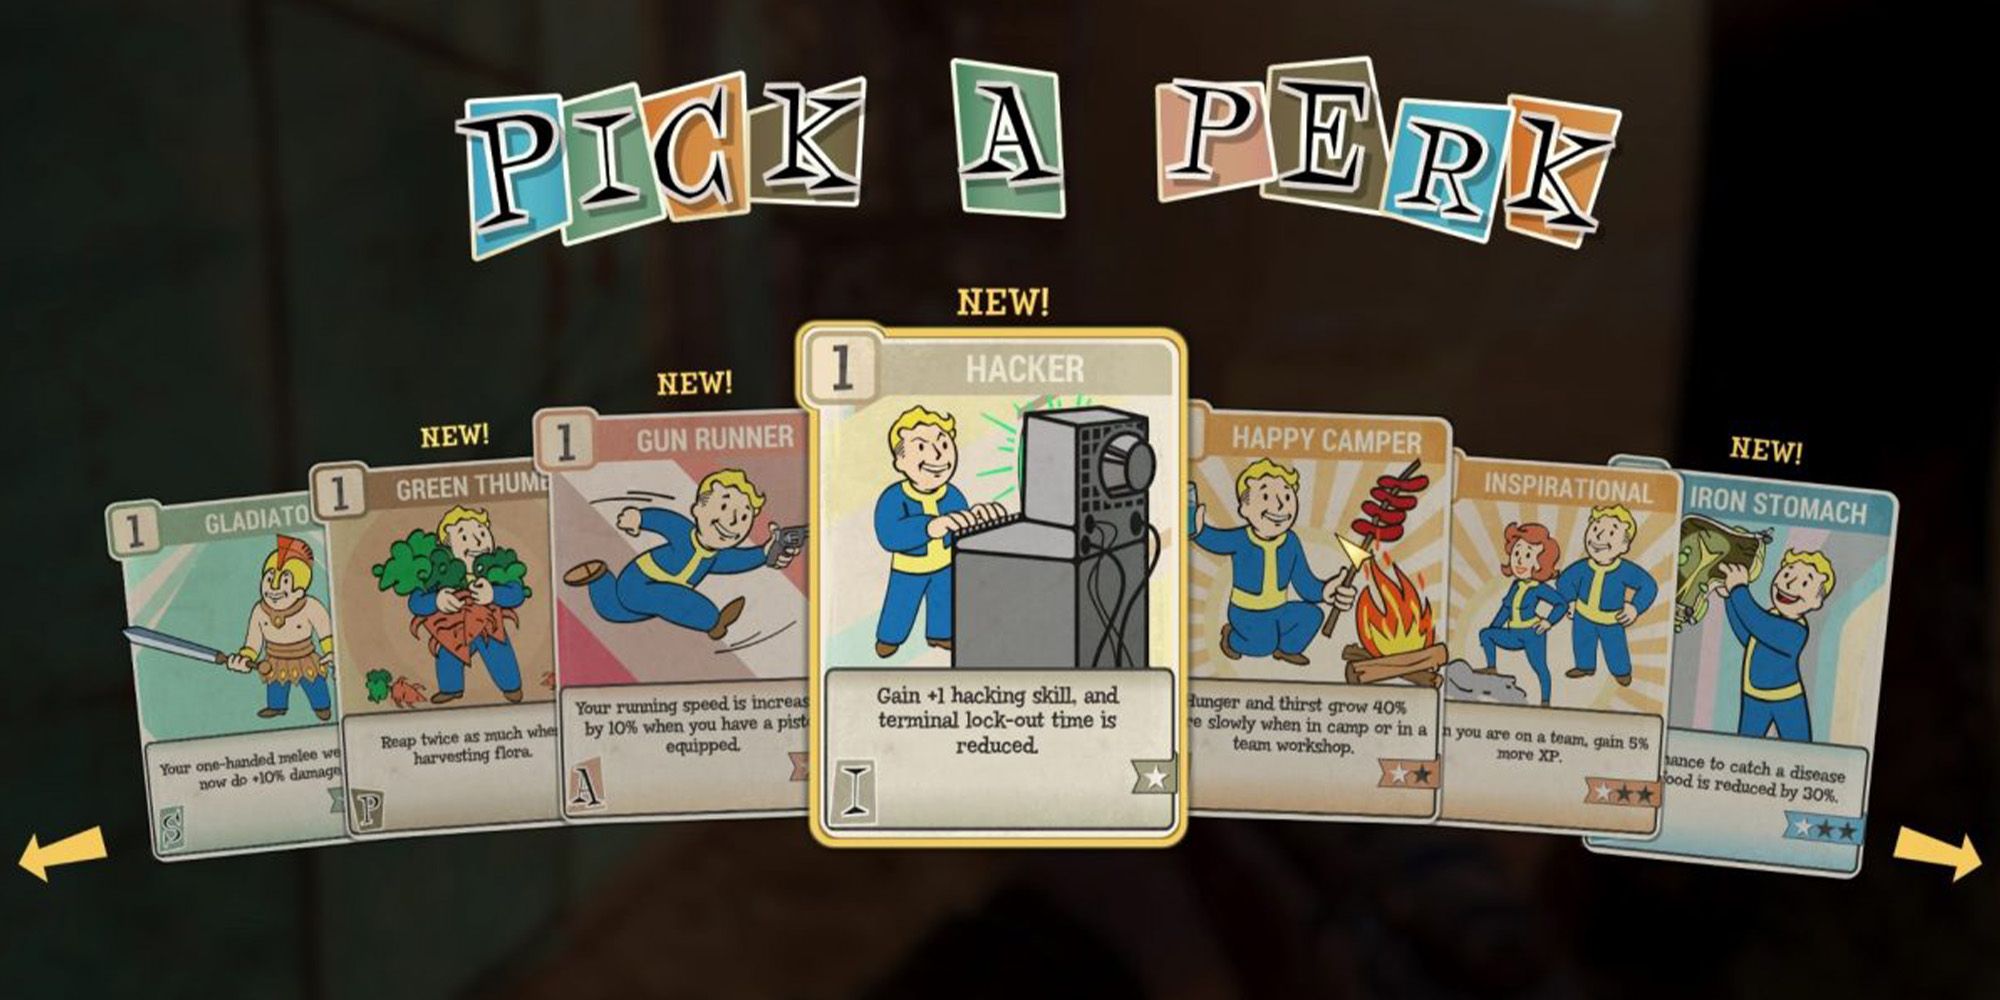 Perk Screen from Fallout 76